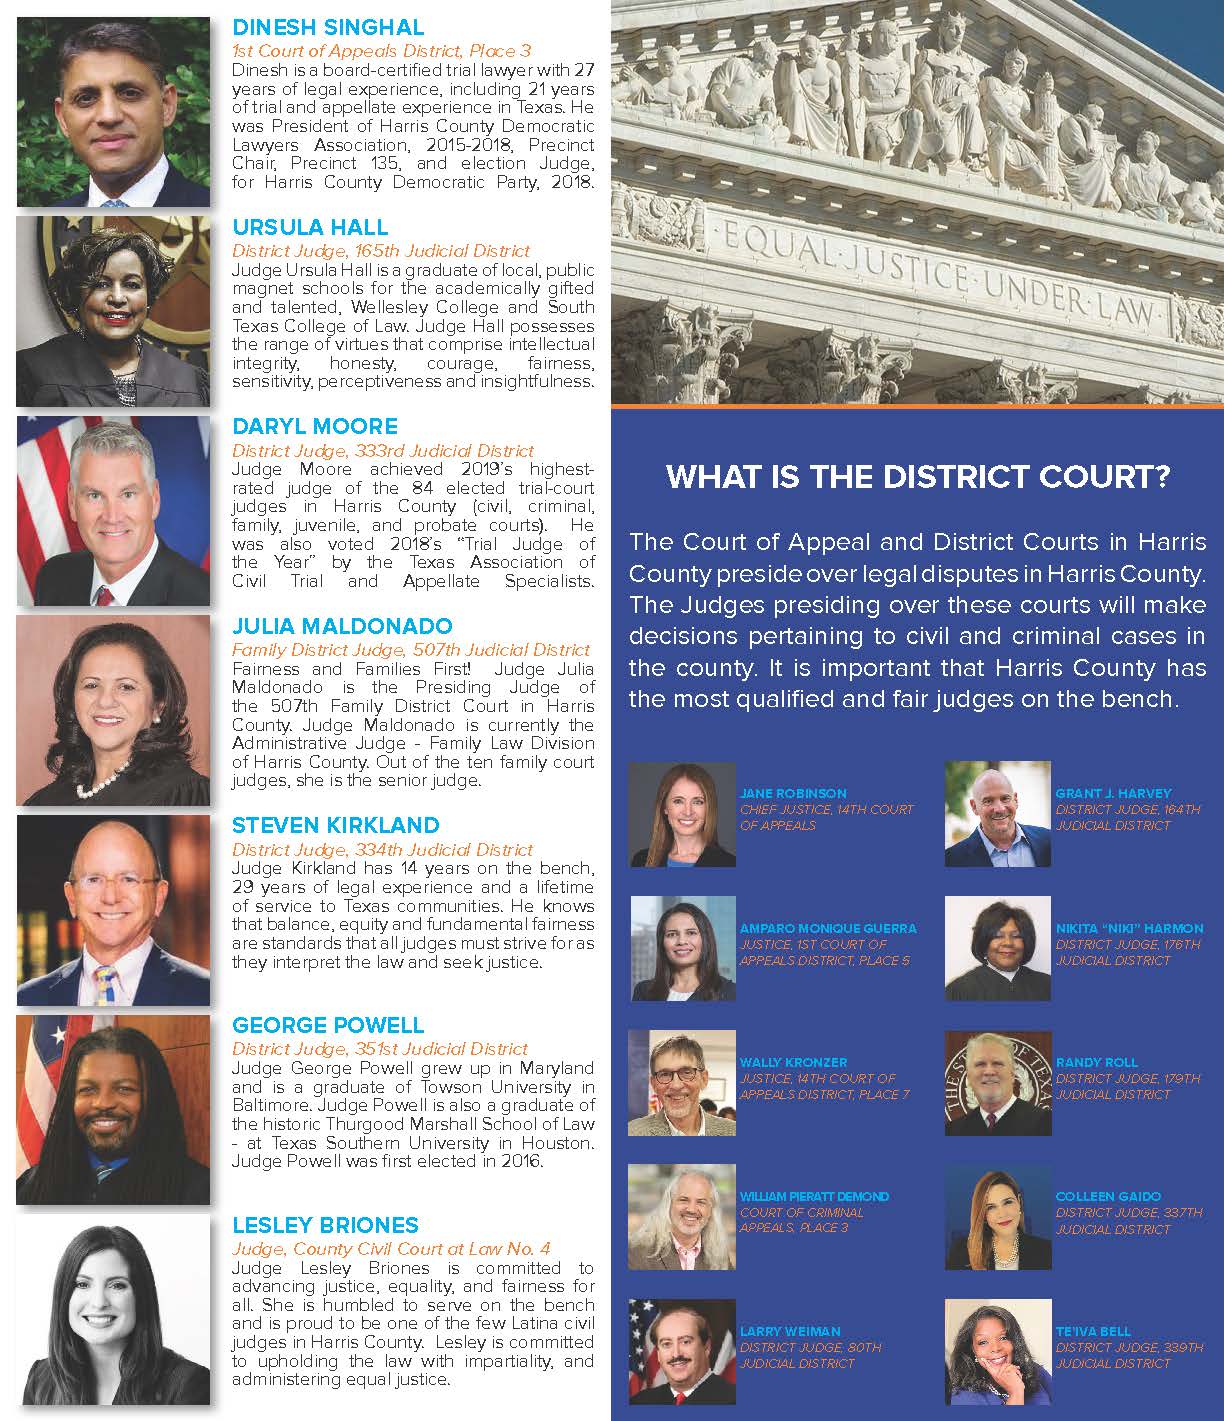 Harris County 2020 Democratic Primary Progressive Voters Guide - Page 6 & 7